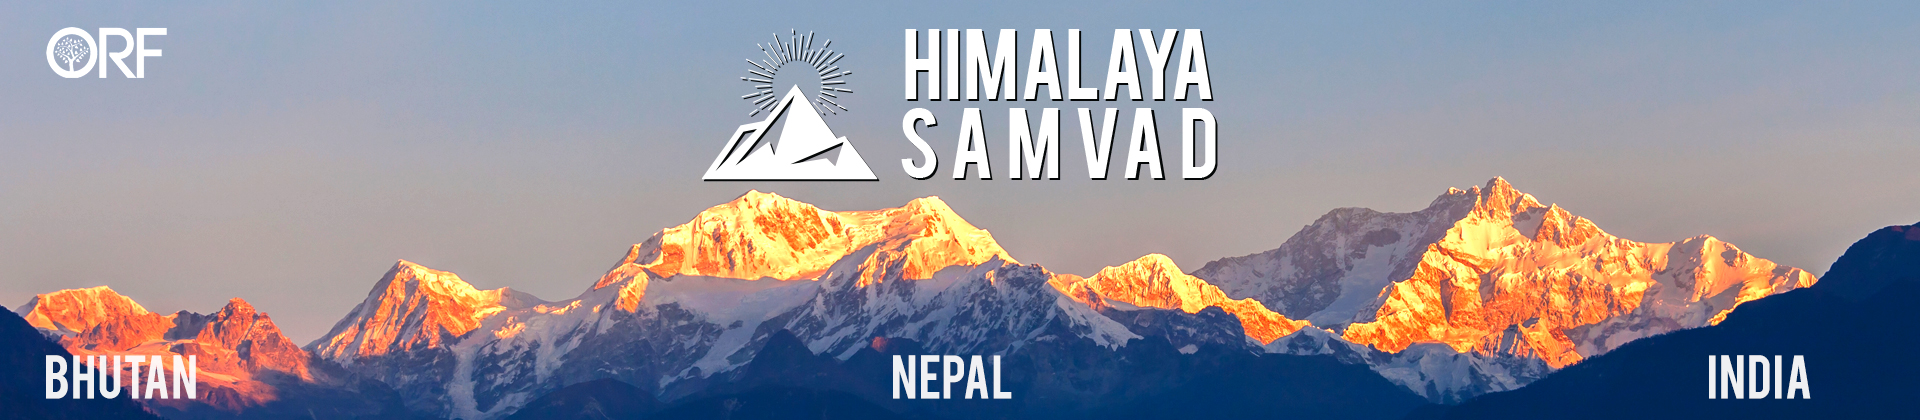 Himalaya Samvad